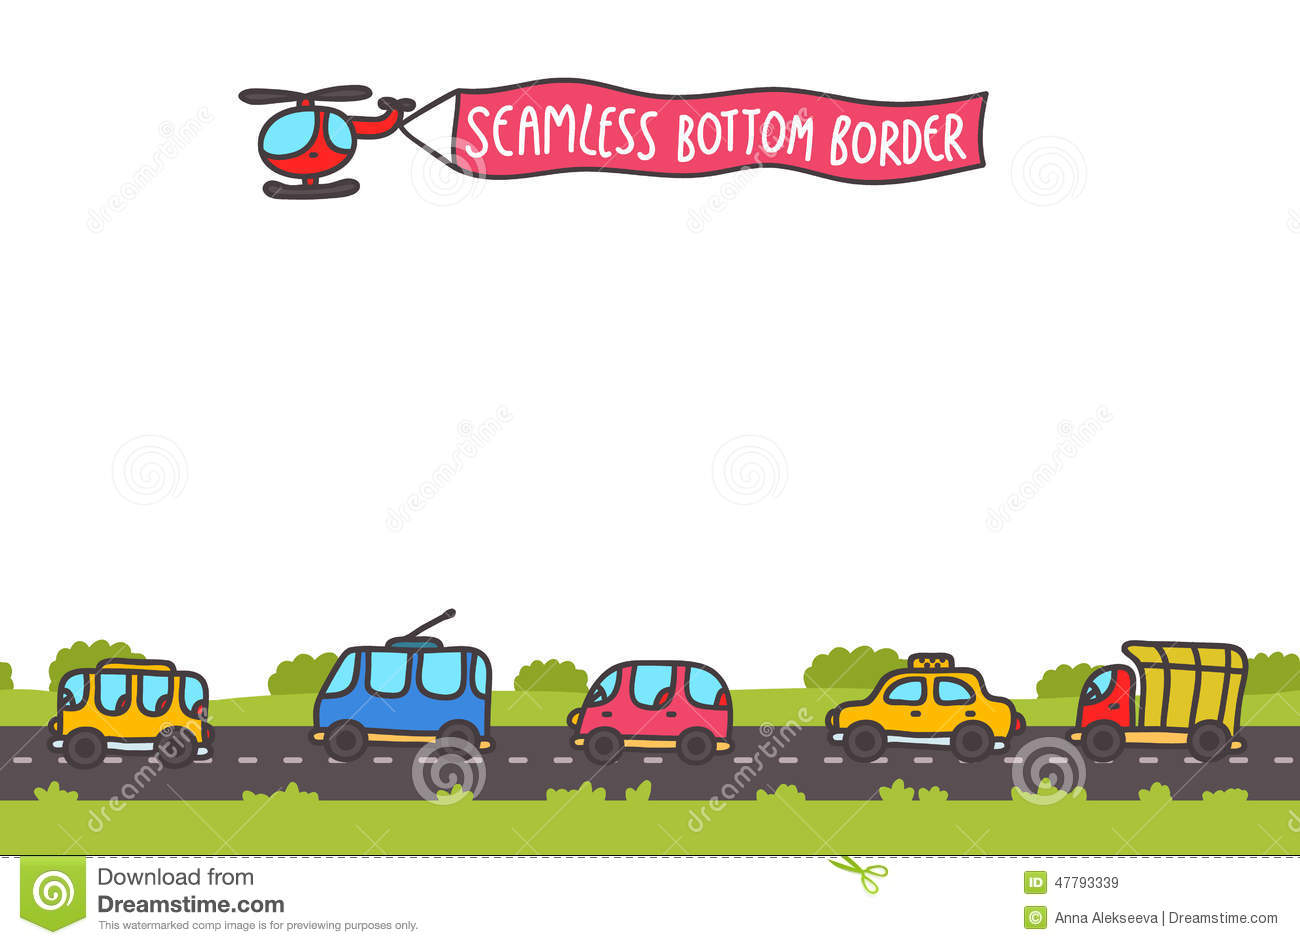 Drawn Transport Bottom Seamless Border Stock Vector   Image  47793339